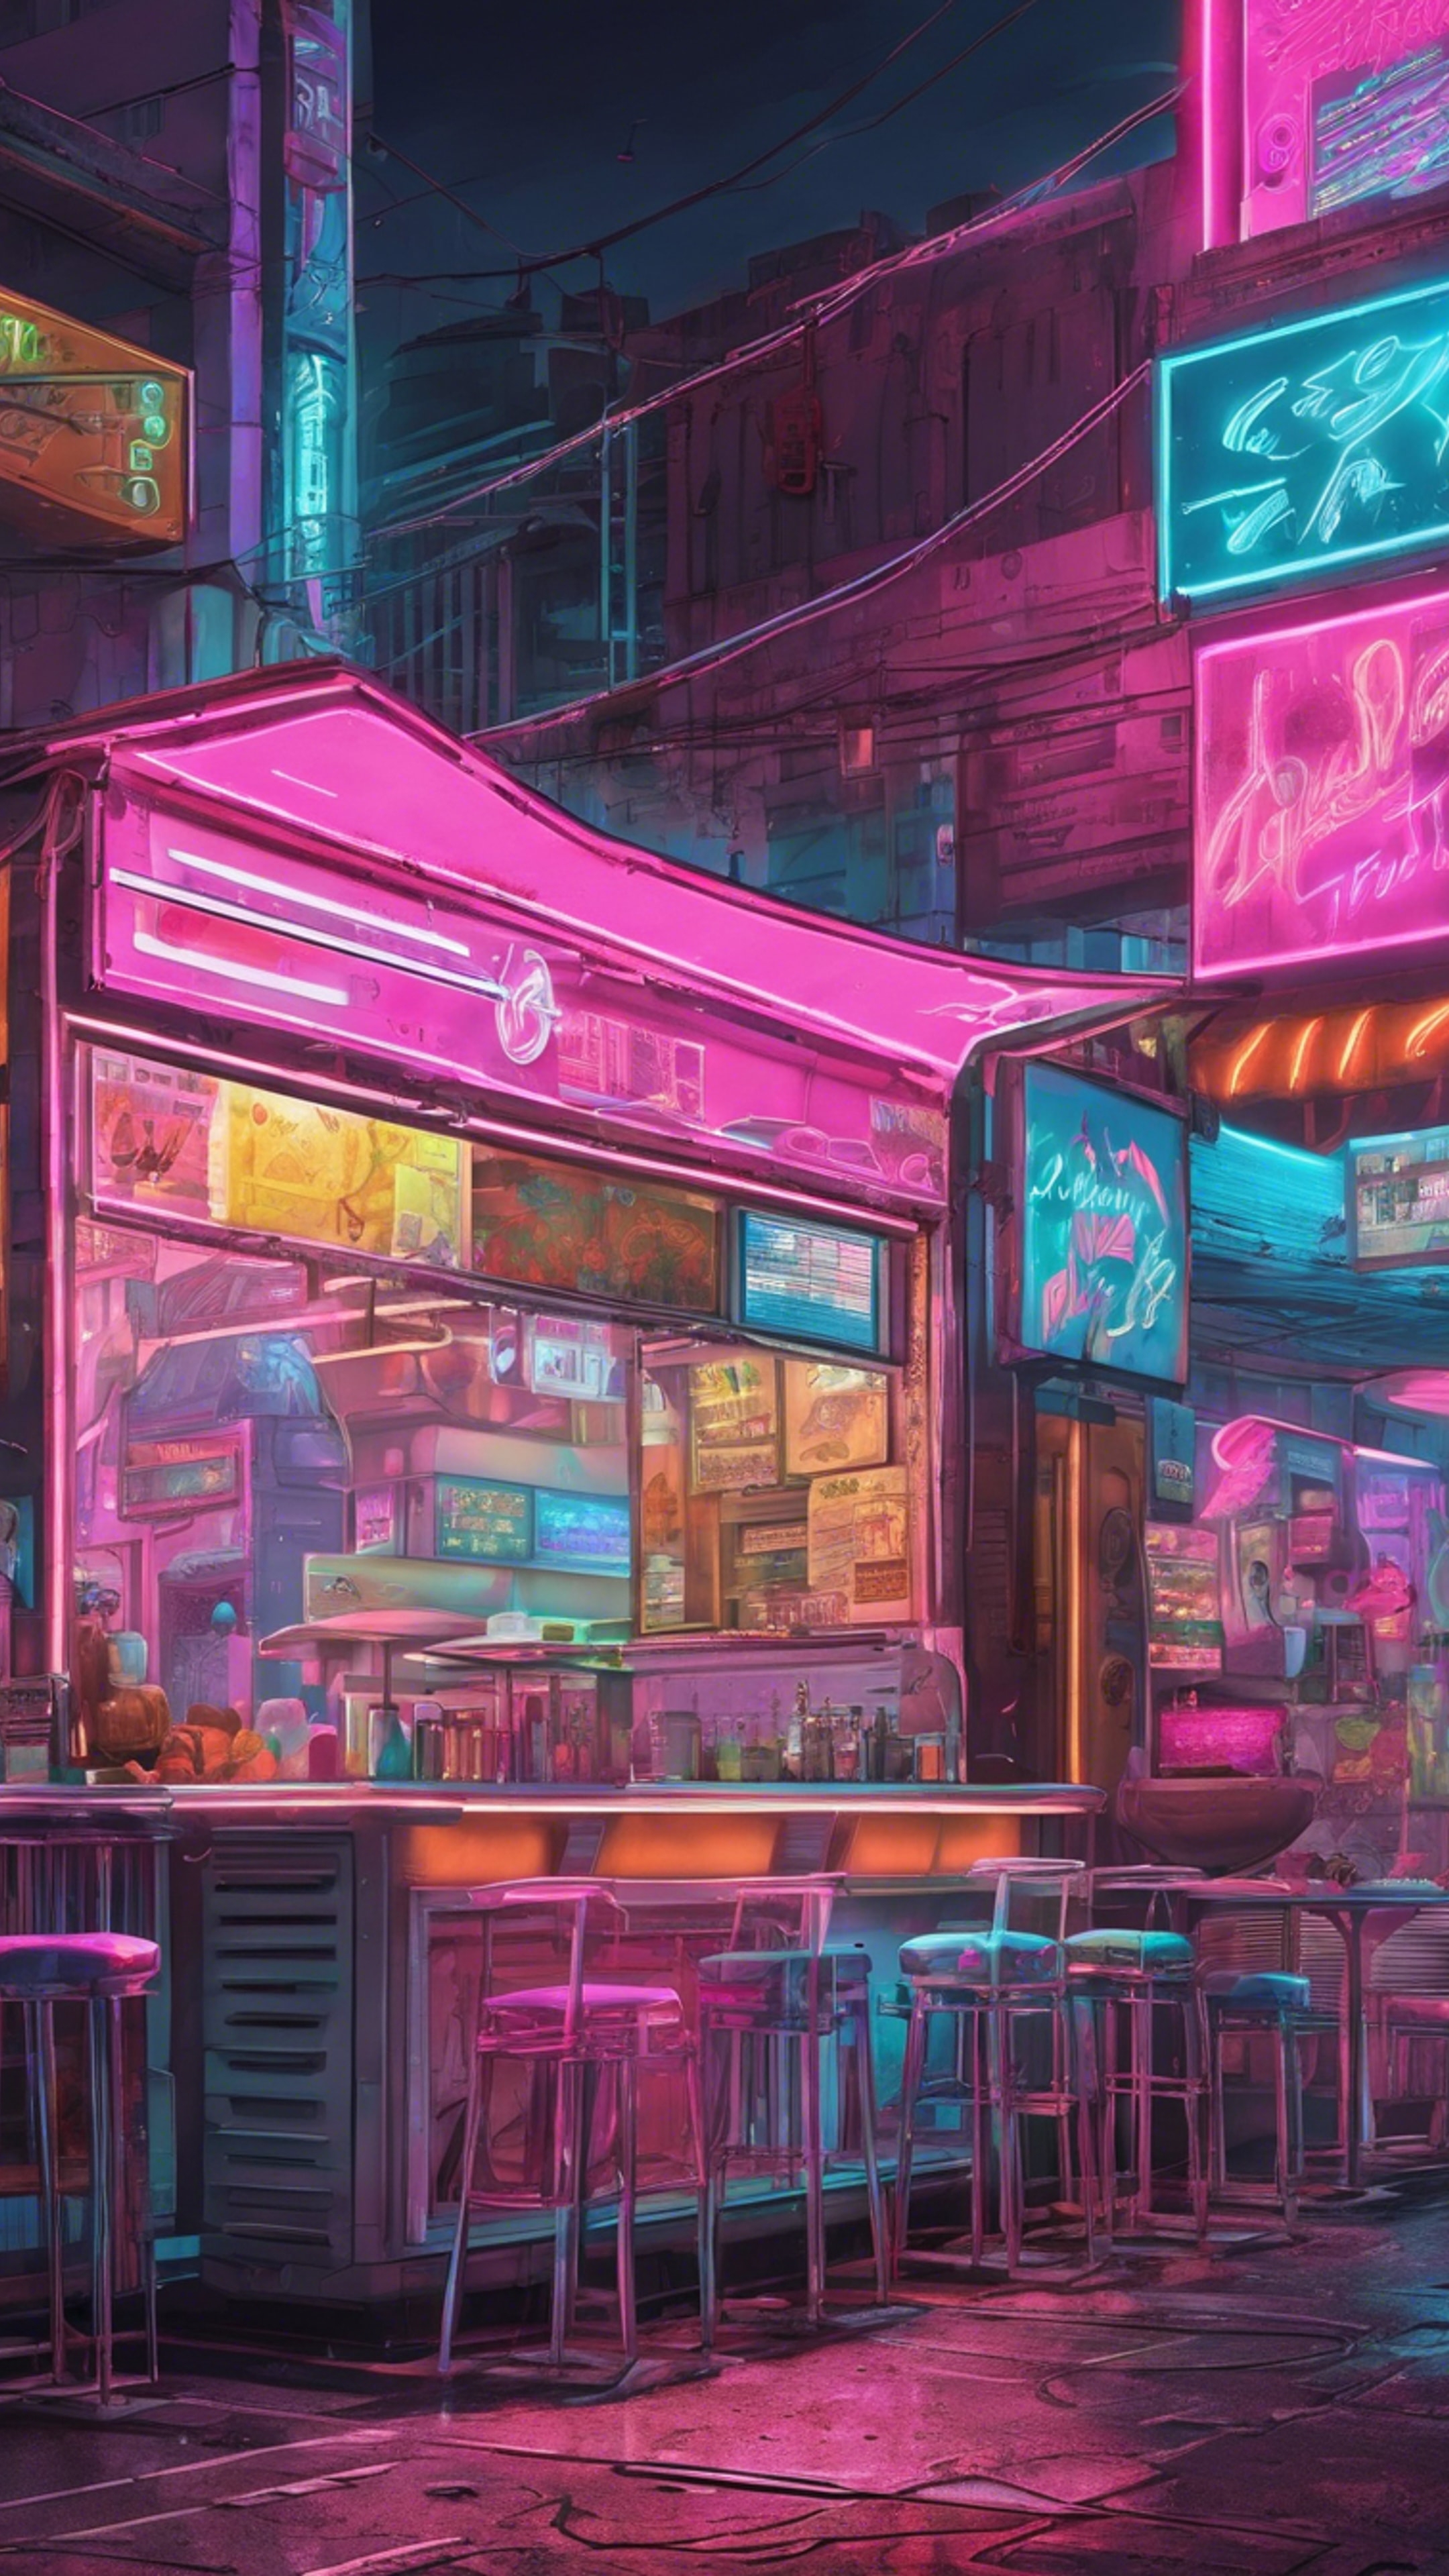 Night scene in a city where cyberpunk meets pastel at a popular street food stall. Divar kağızı[607f993b19214cf28e30]